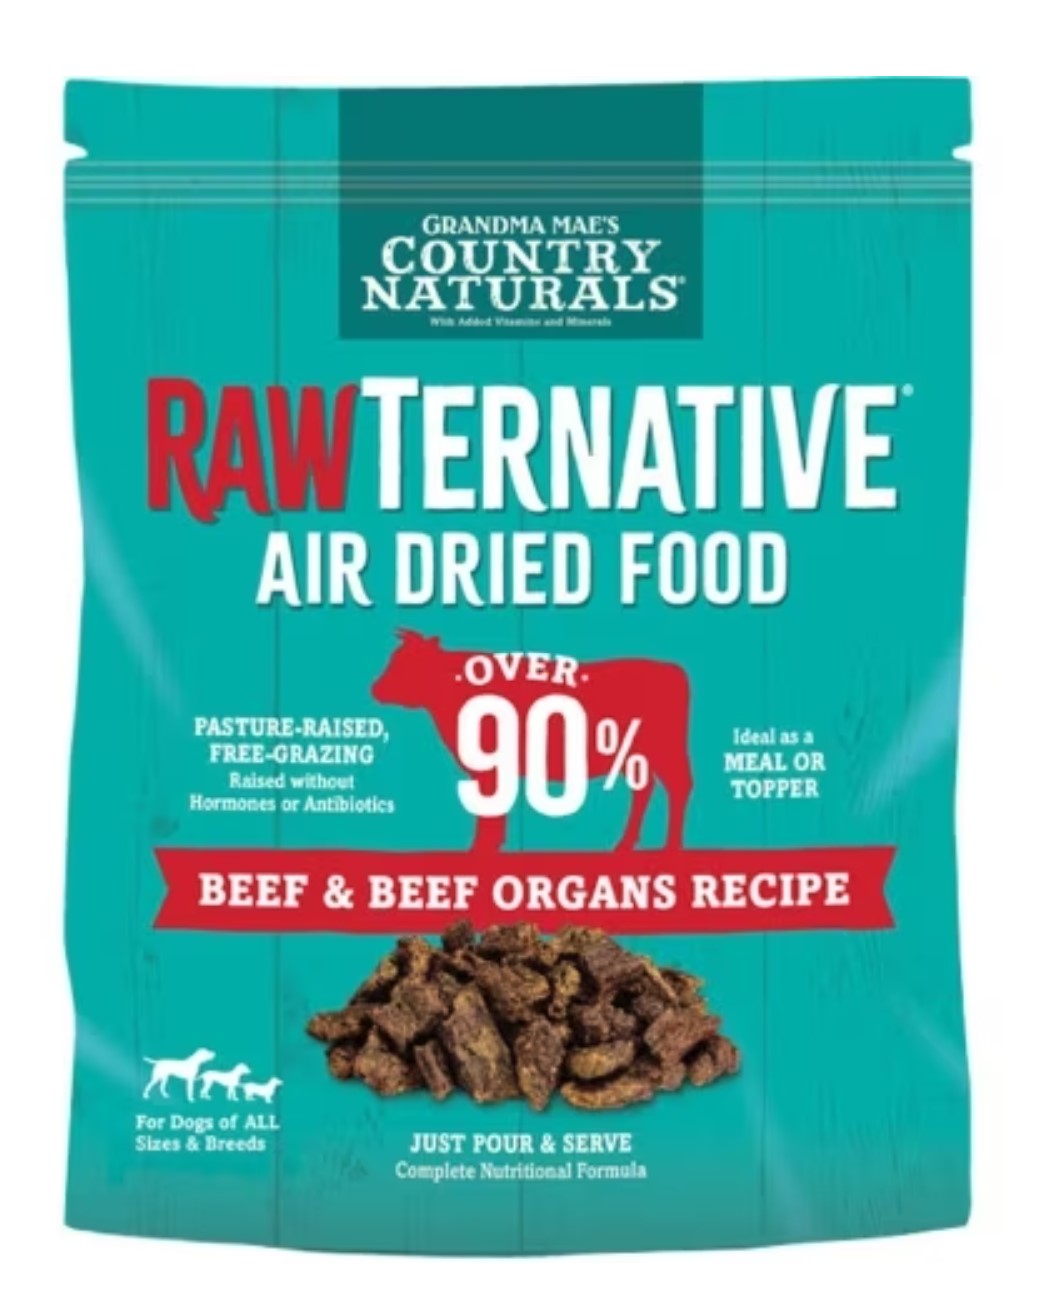 Rawternative Dog Food - Beef *